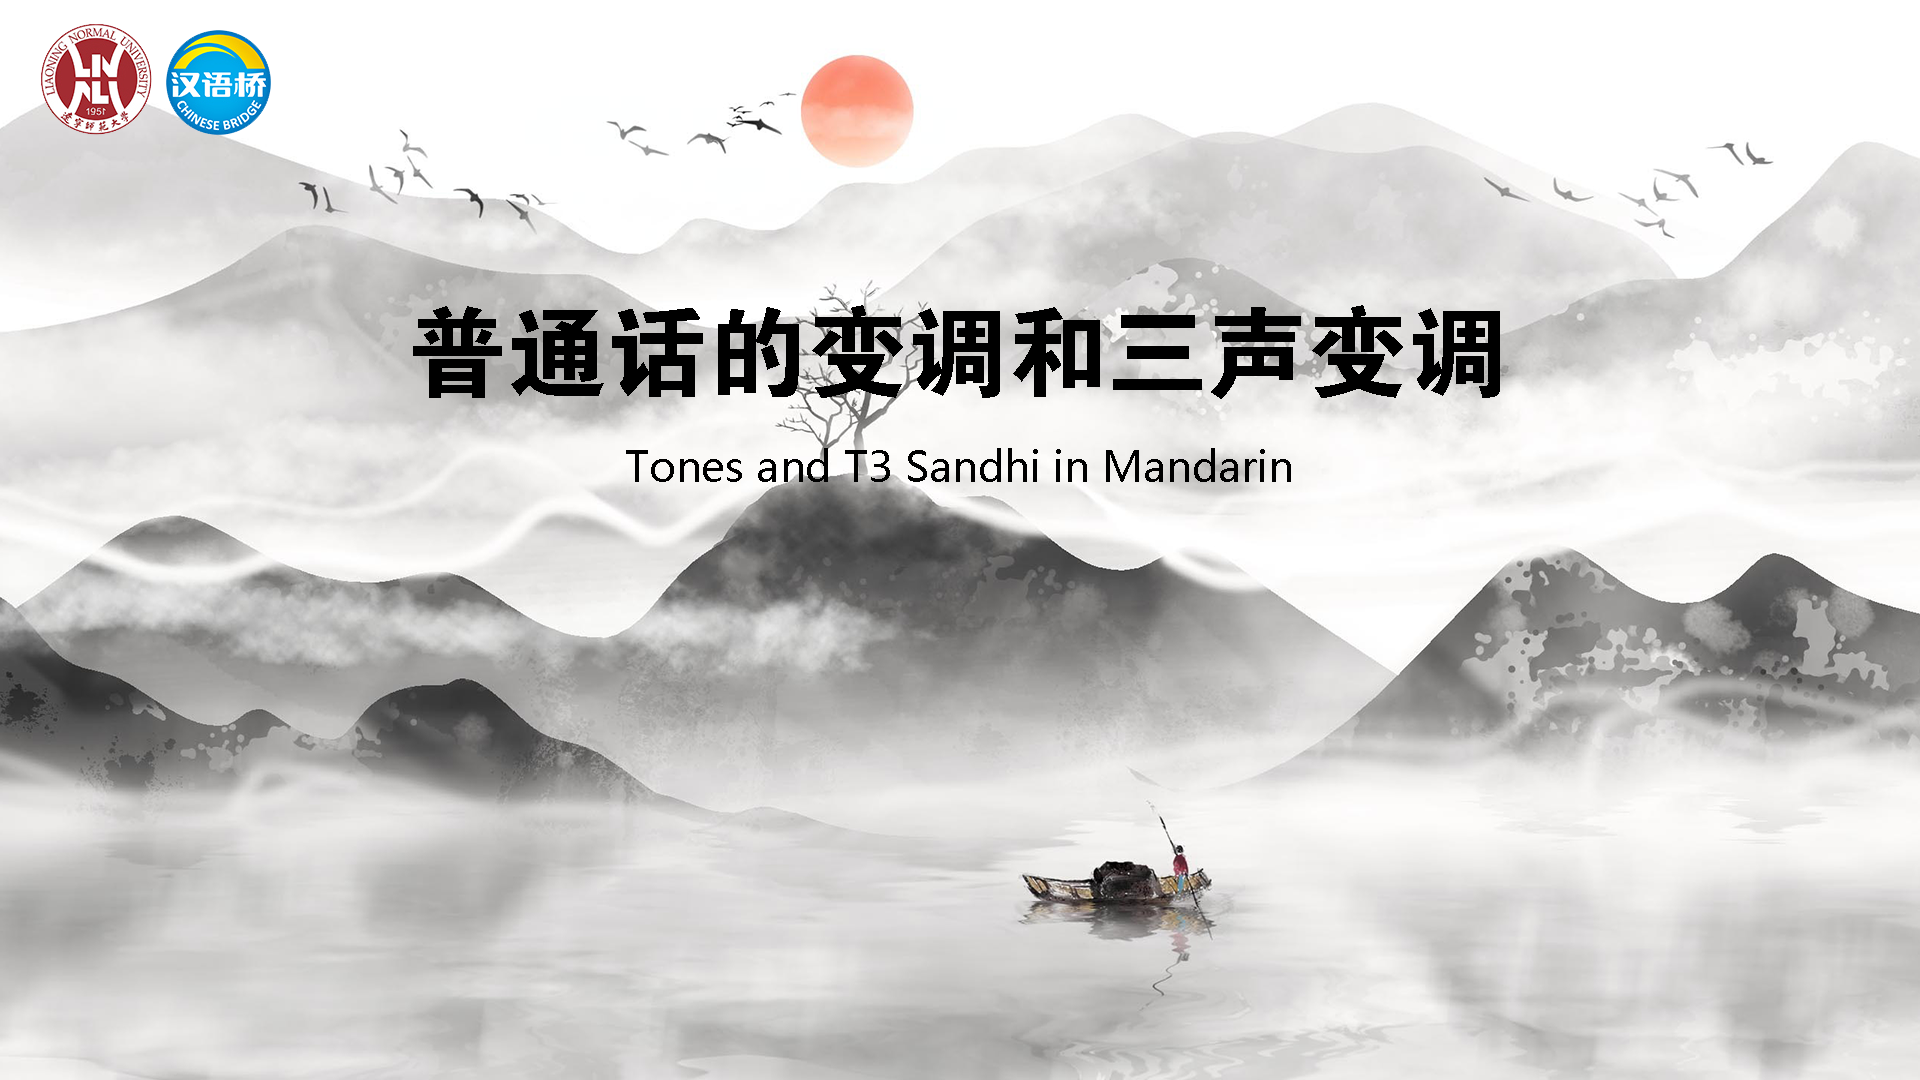 Tones and T3 Sandhi in Mandarin